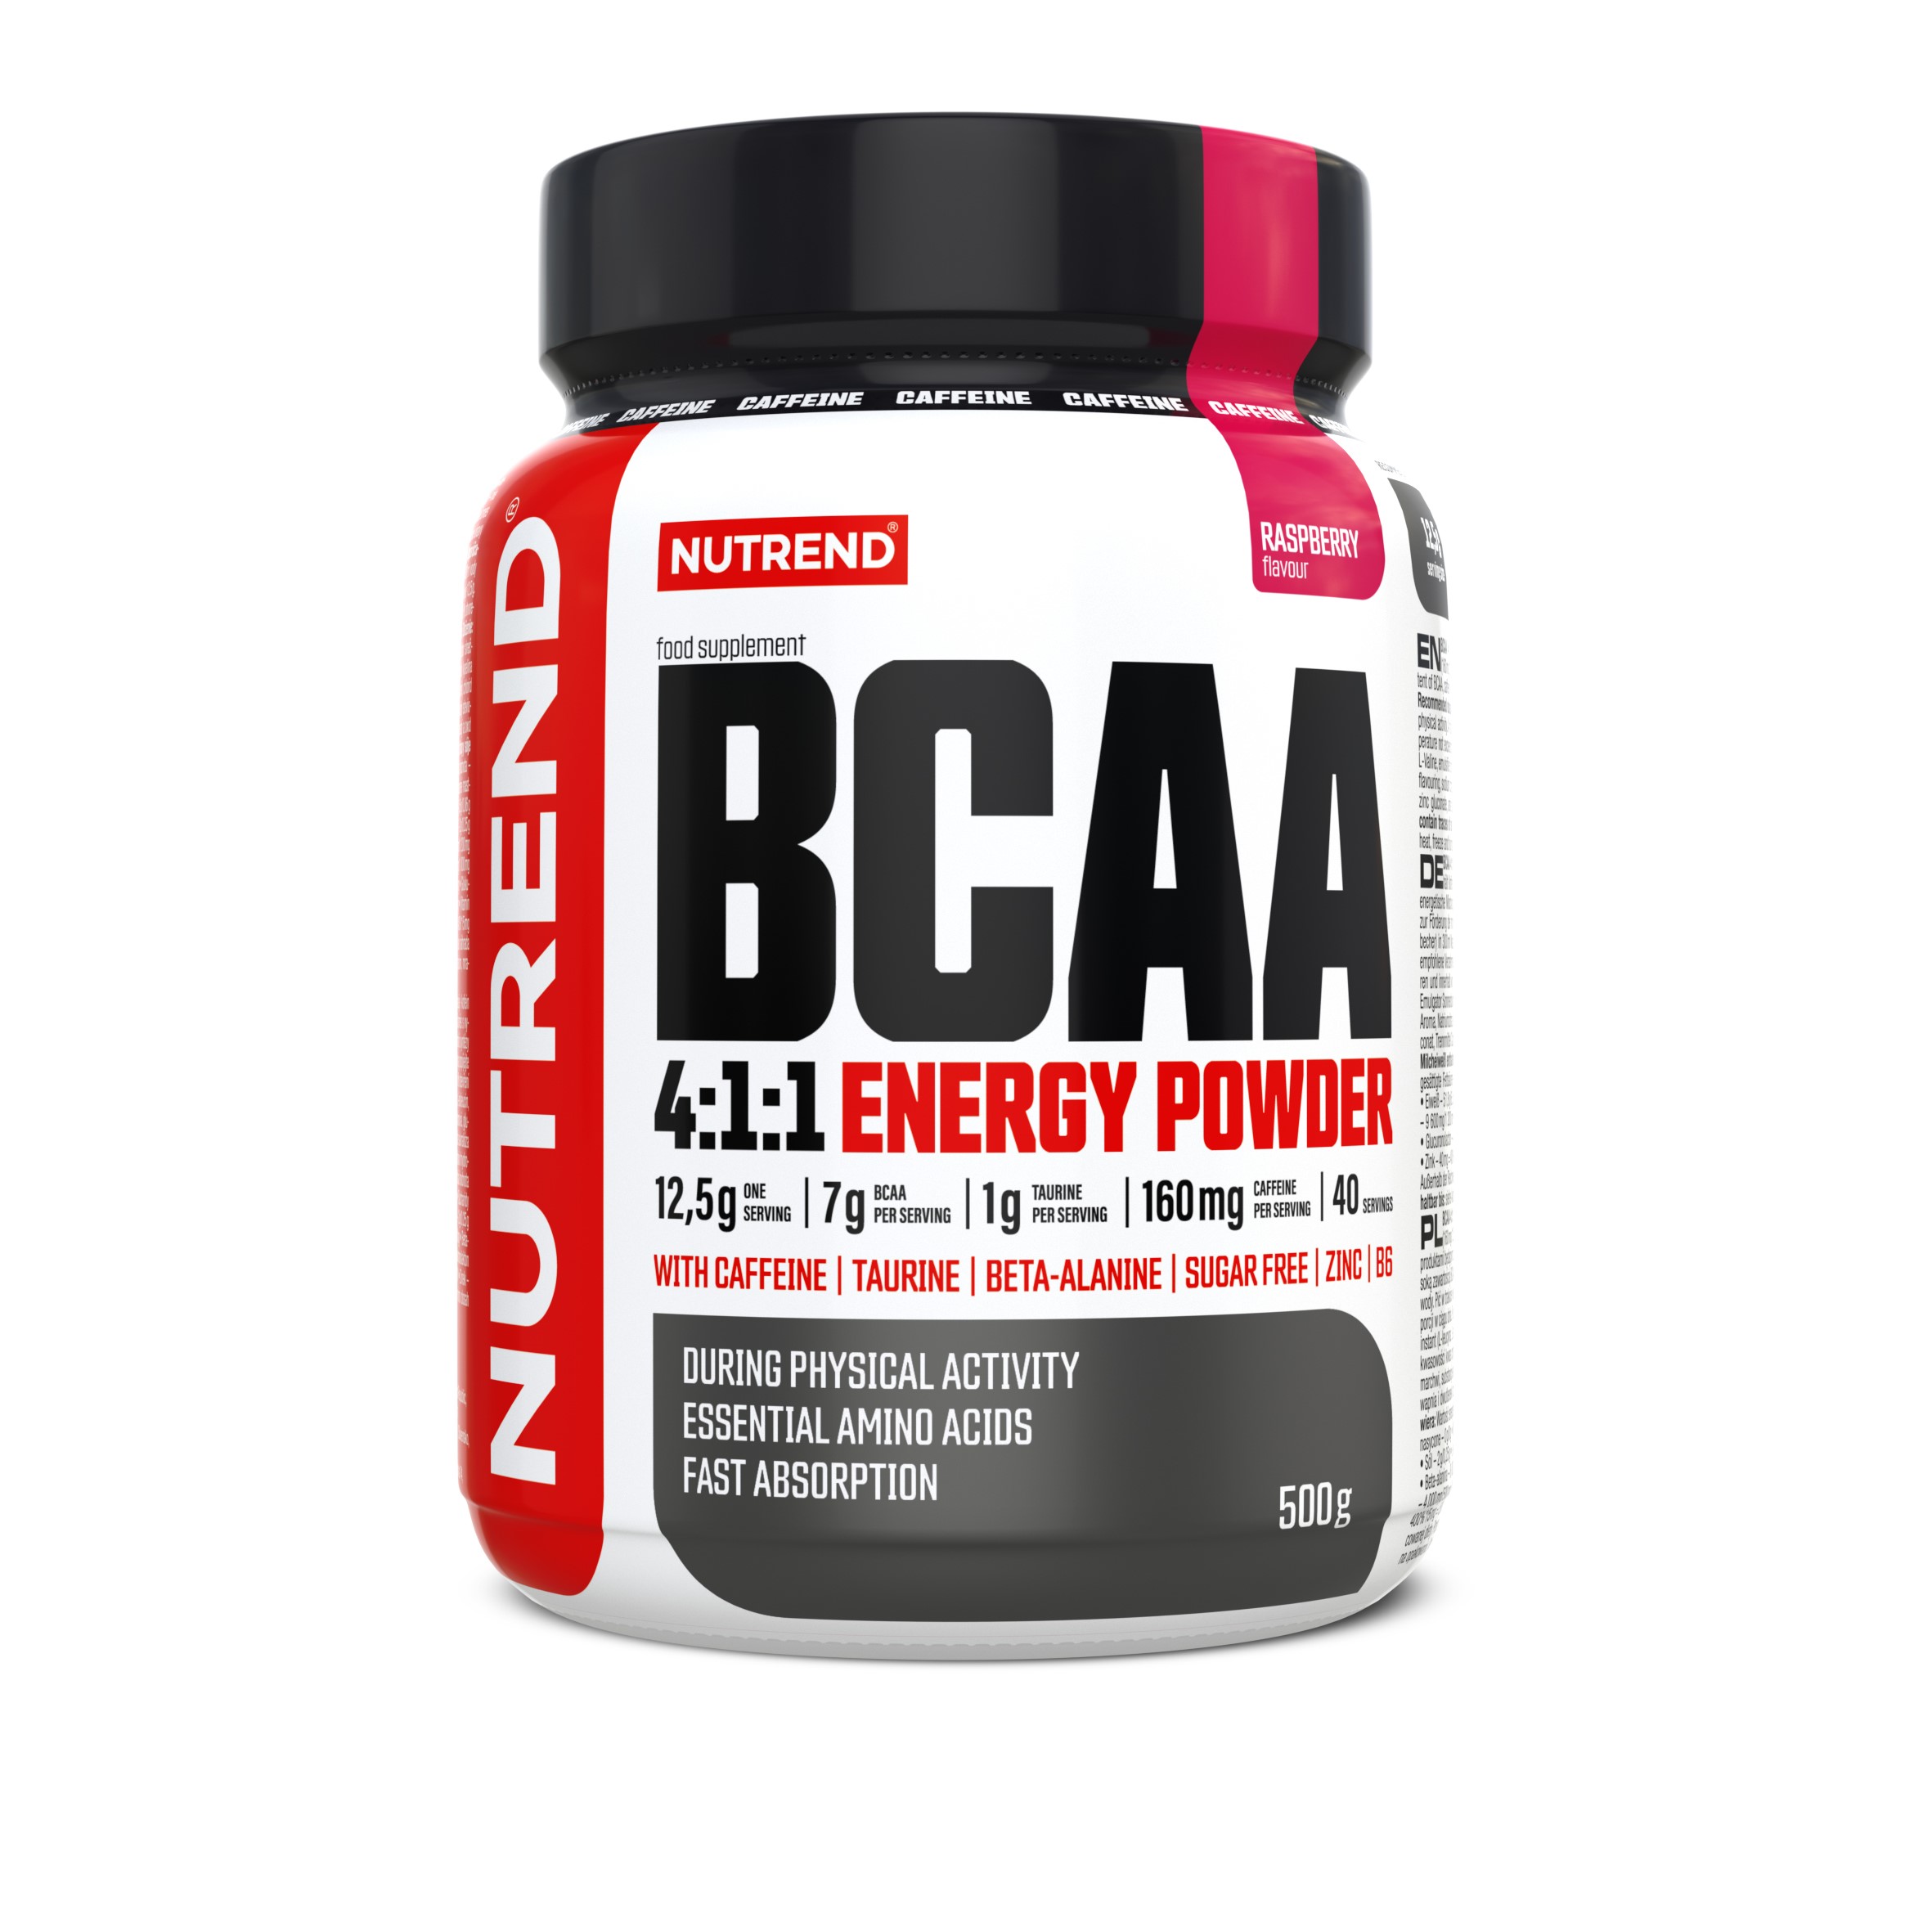 BCAA - BCAA 4:1:1 ENERGY POWDER 500g Raspberry, advancednutrition.ro